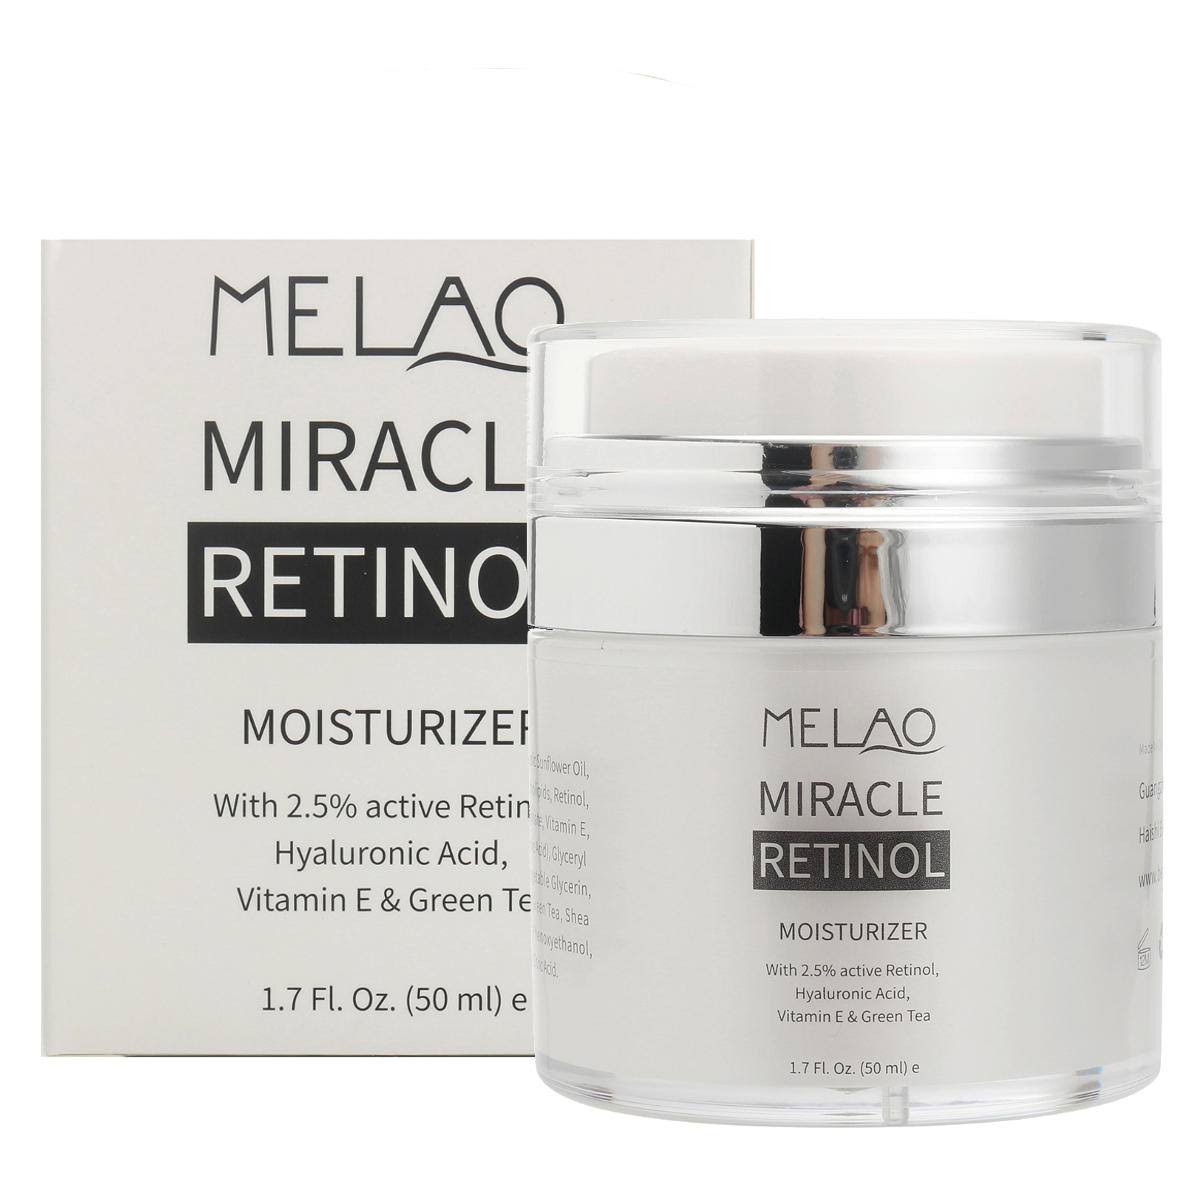 Melao Miracle Retinol Moisturizer Cream 50ml + Free ARGAN OIL 10ml